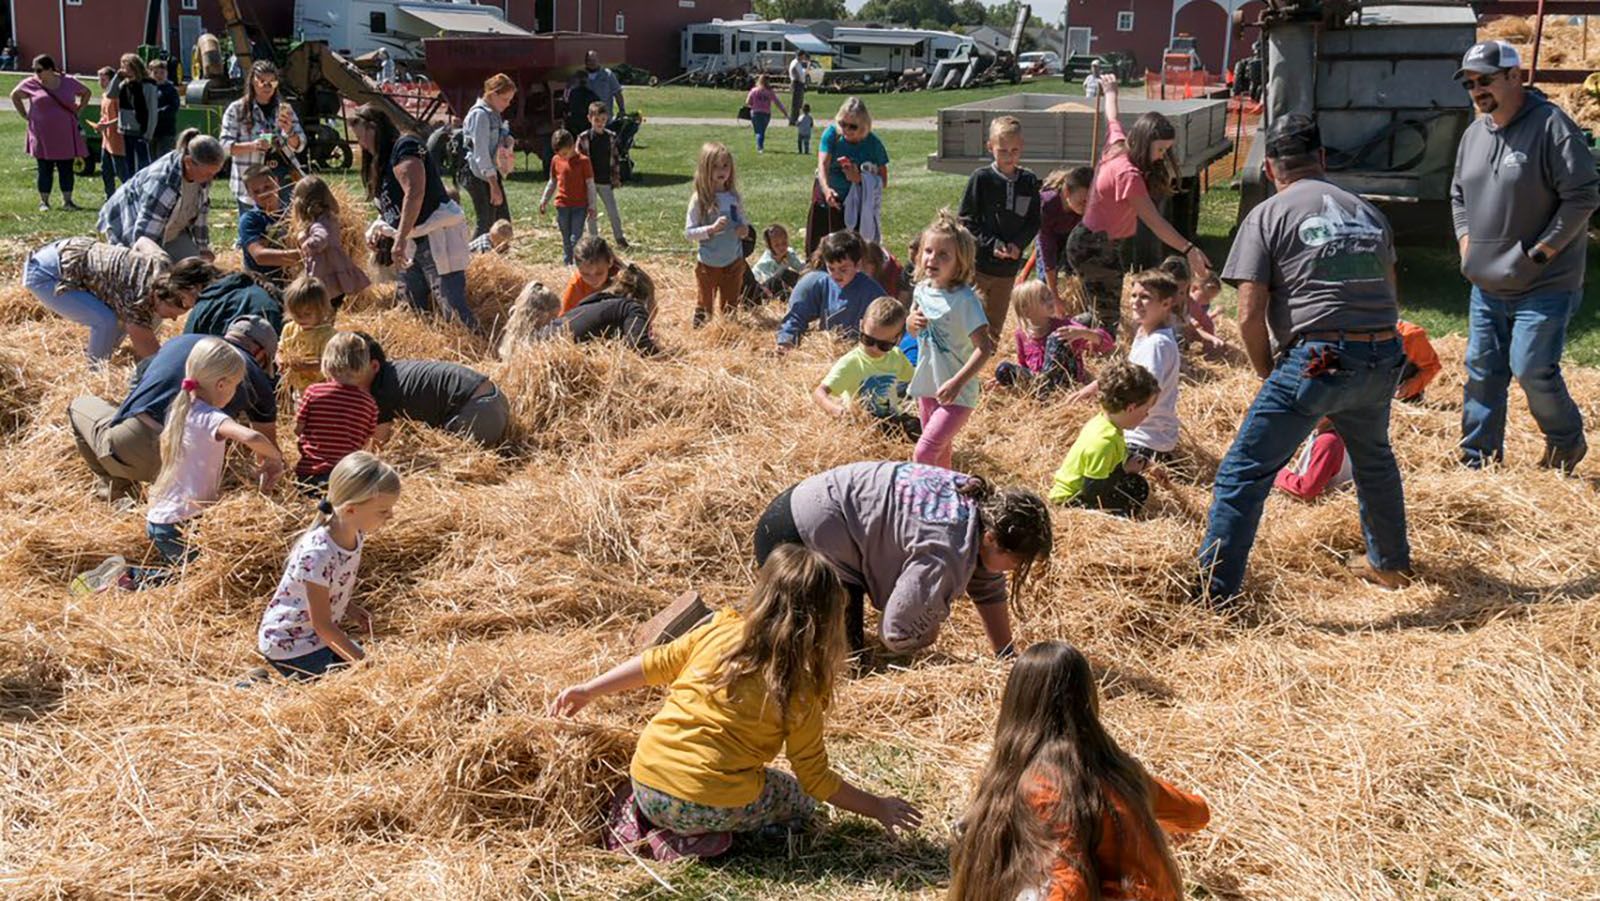 Fall Harvest Festival will be Sept. 22-23 at Salomon Farm Park.